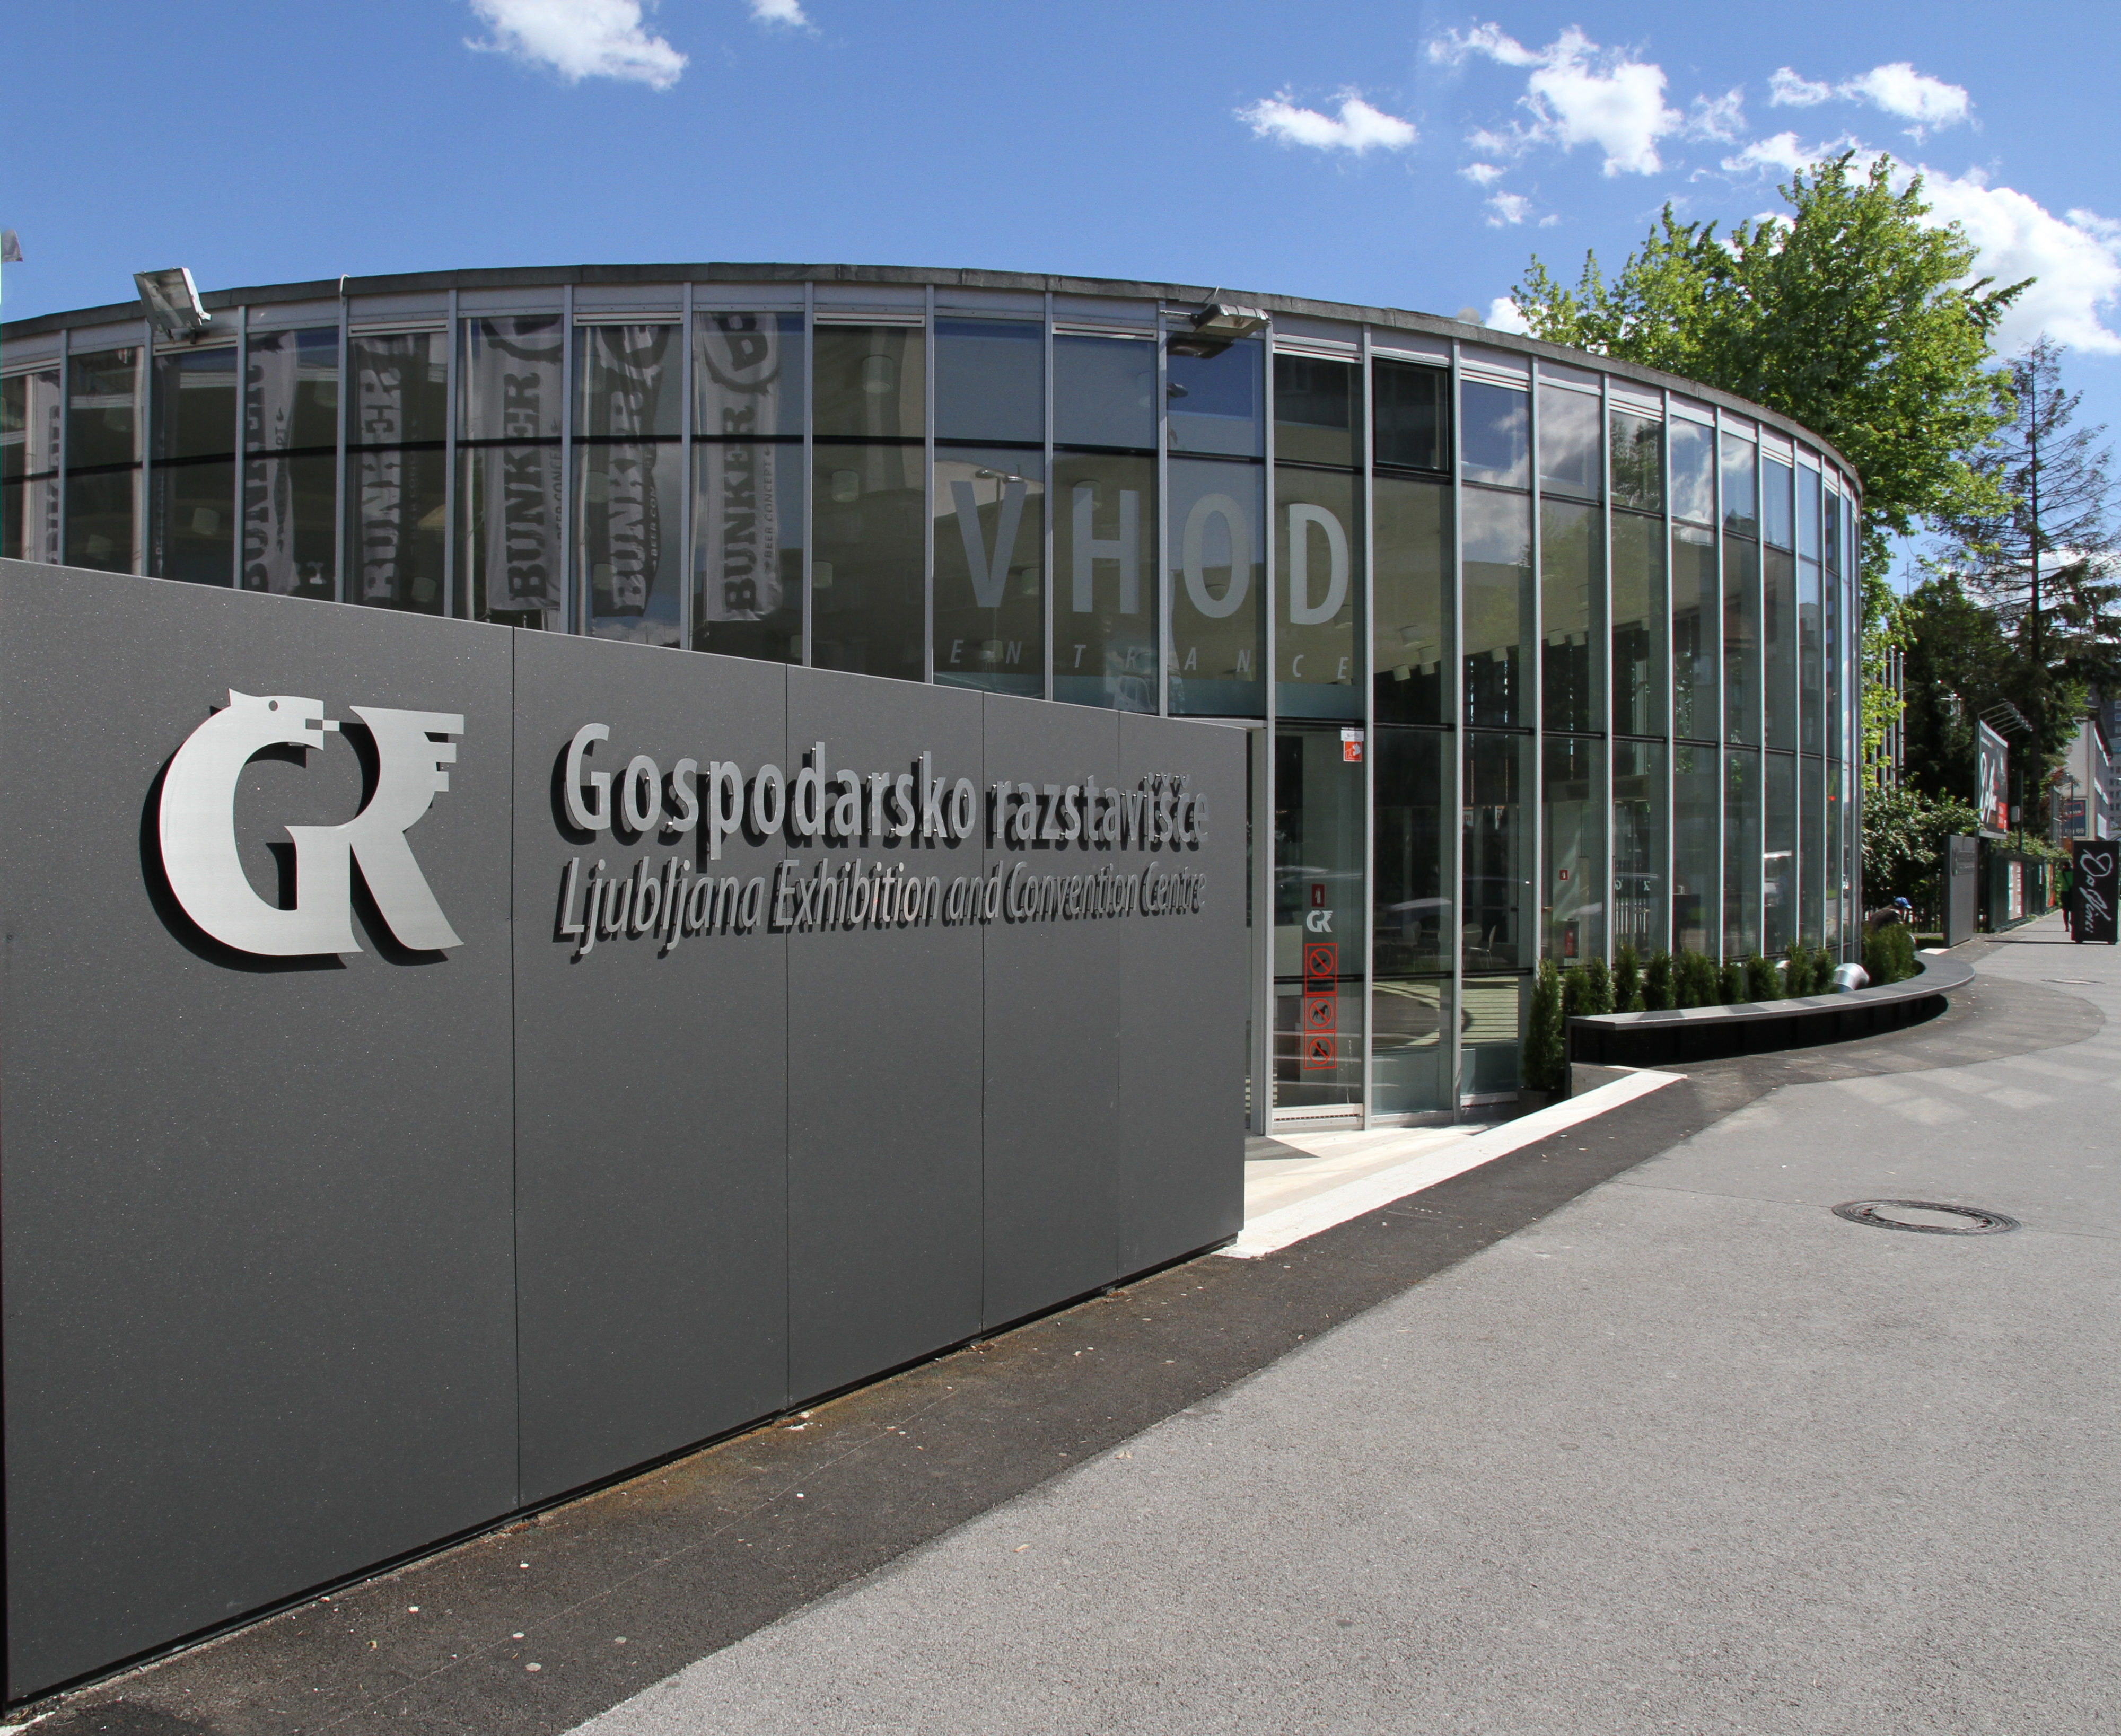 GR - Ljubljana Exhibition and Convention Centre